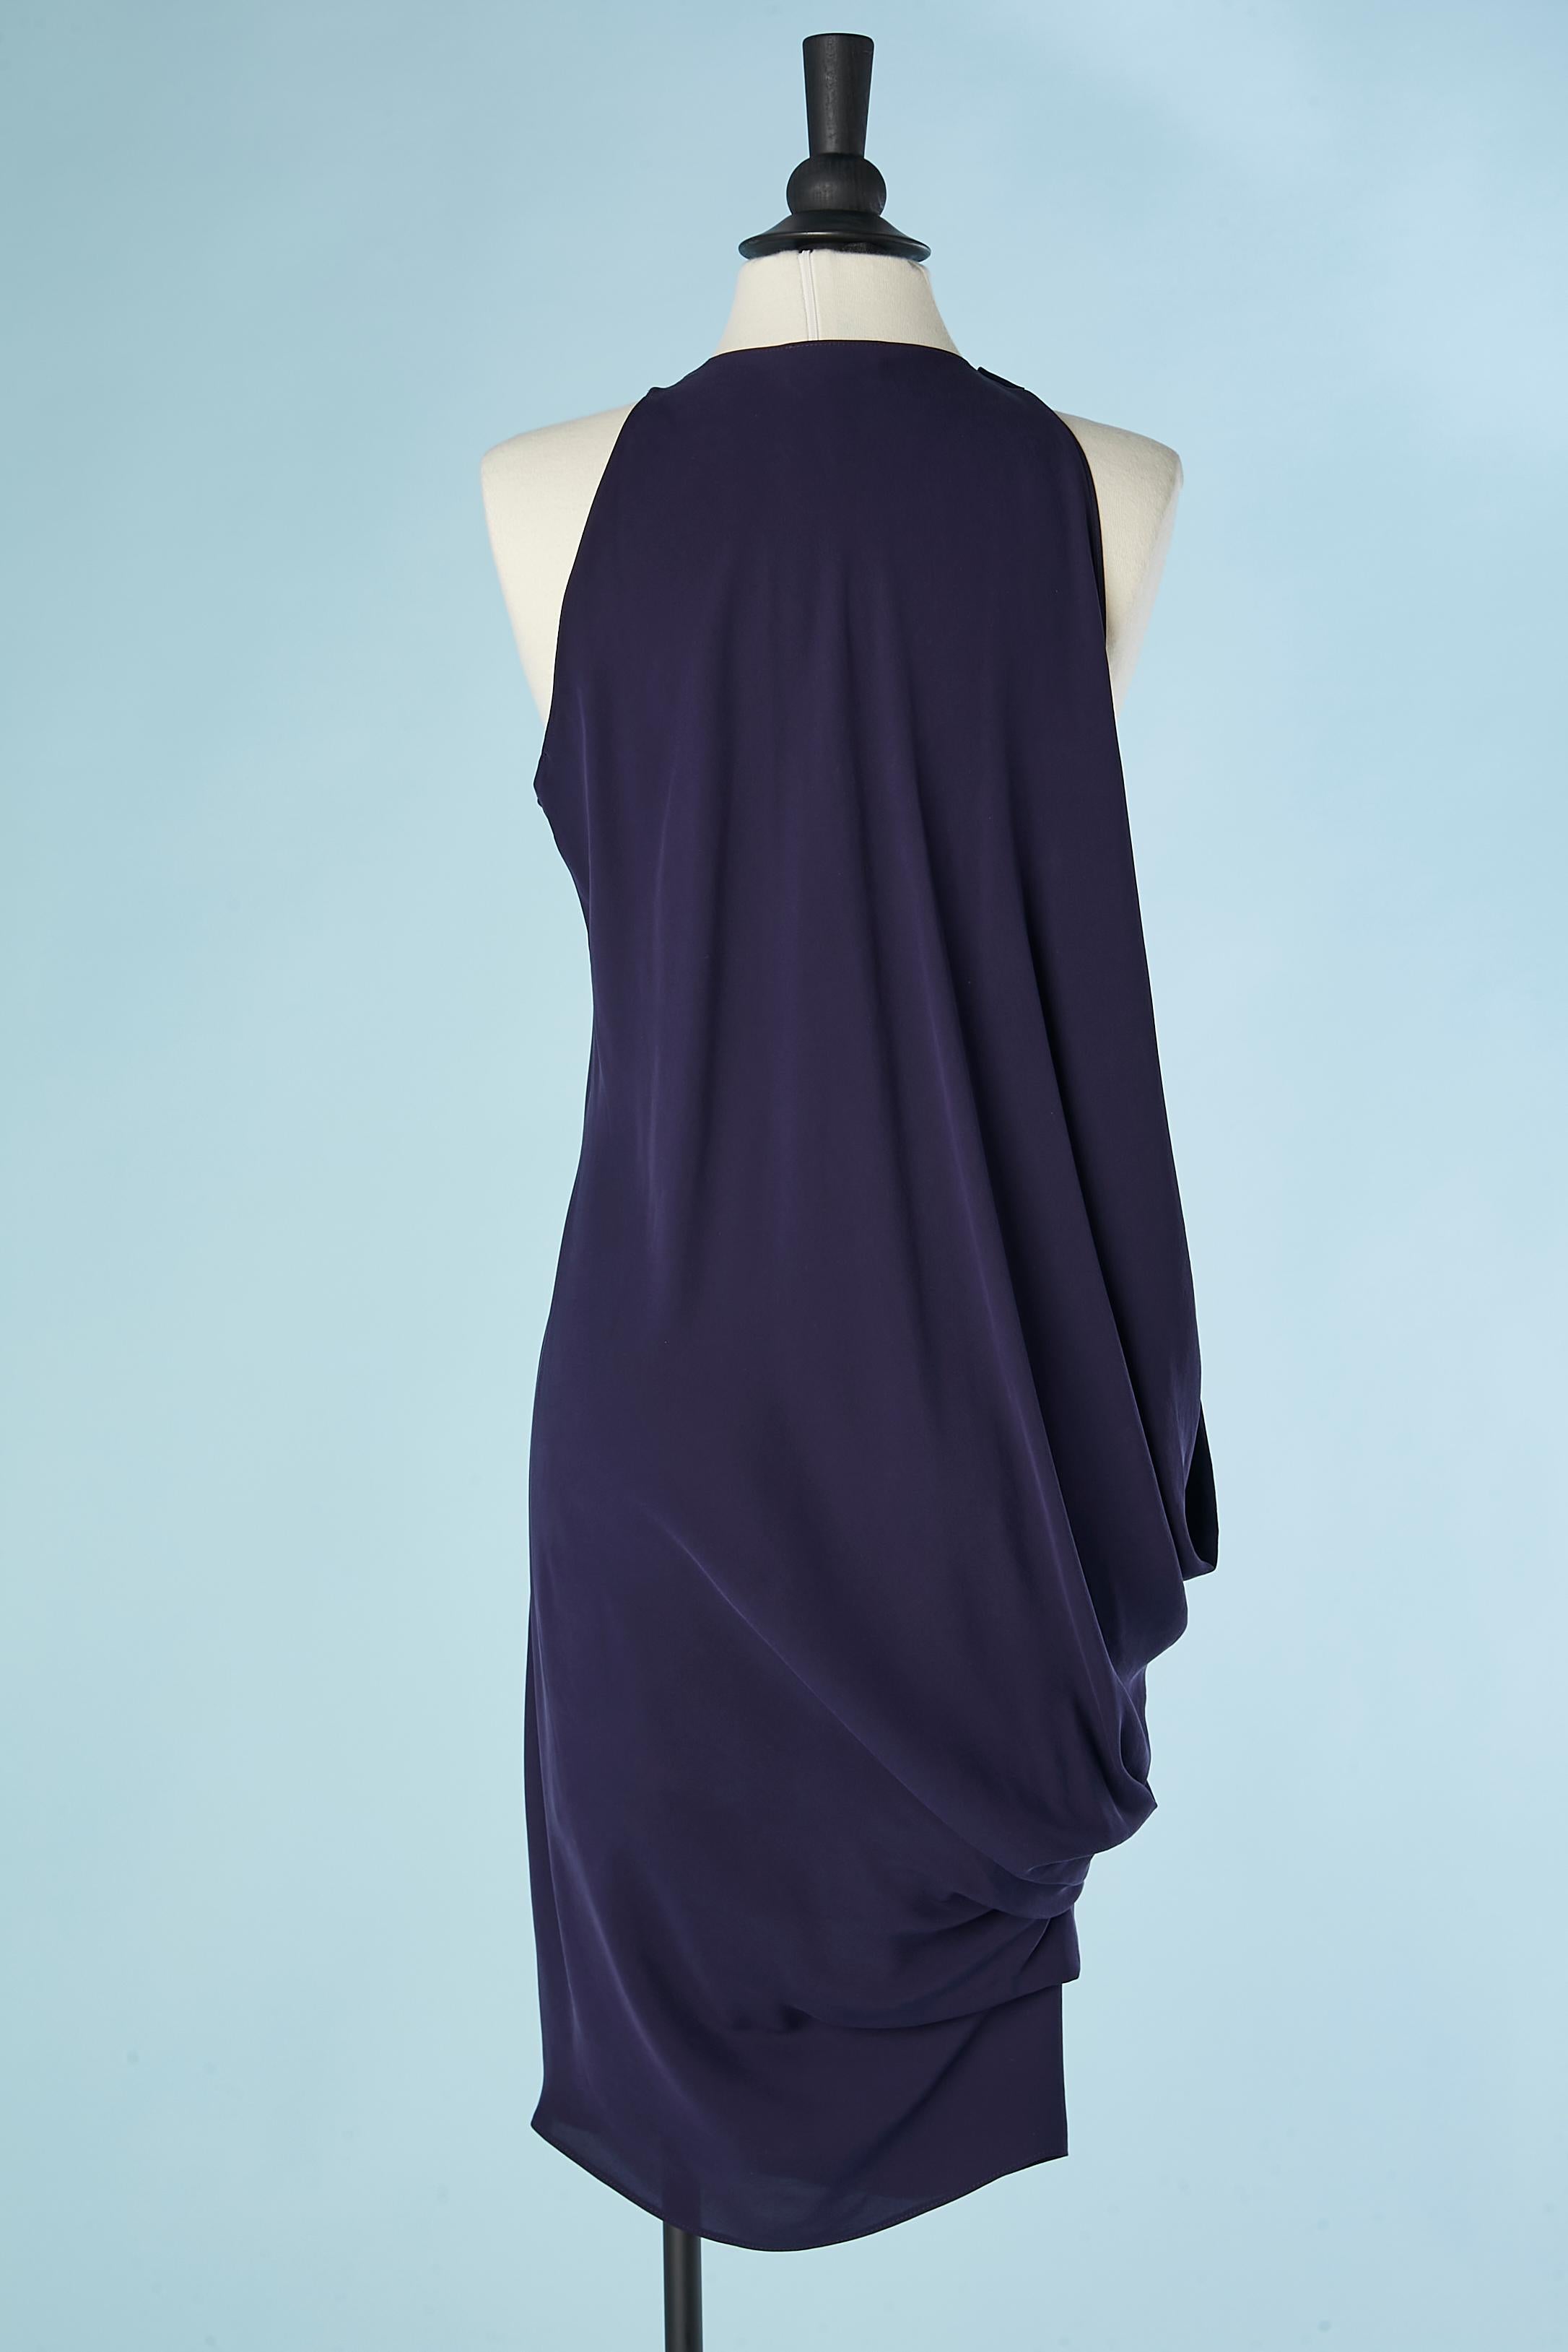 Asymmetrical navy blue silk cocktail dress Lanvin by Alber Elbaz SS 2012 1